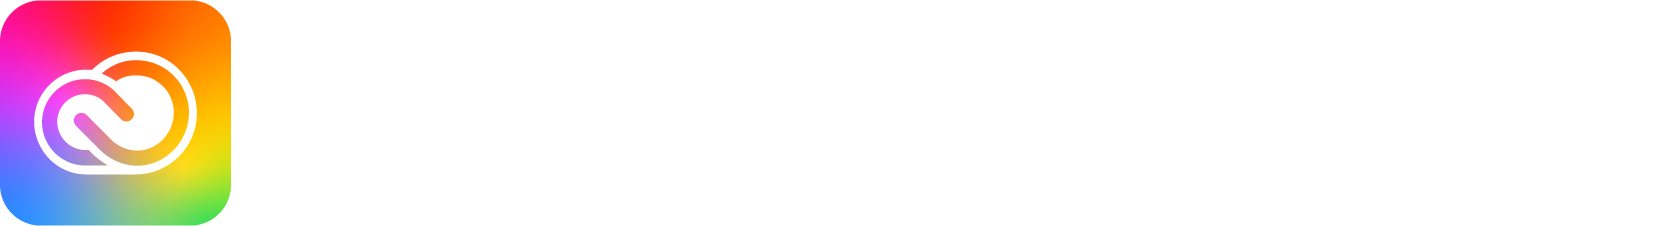 Adobe Creative Cloud Logo Horizontal White